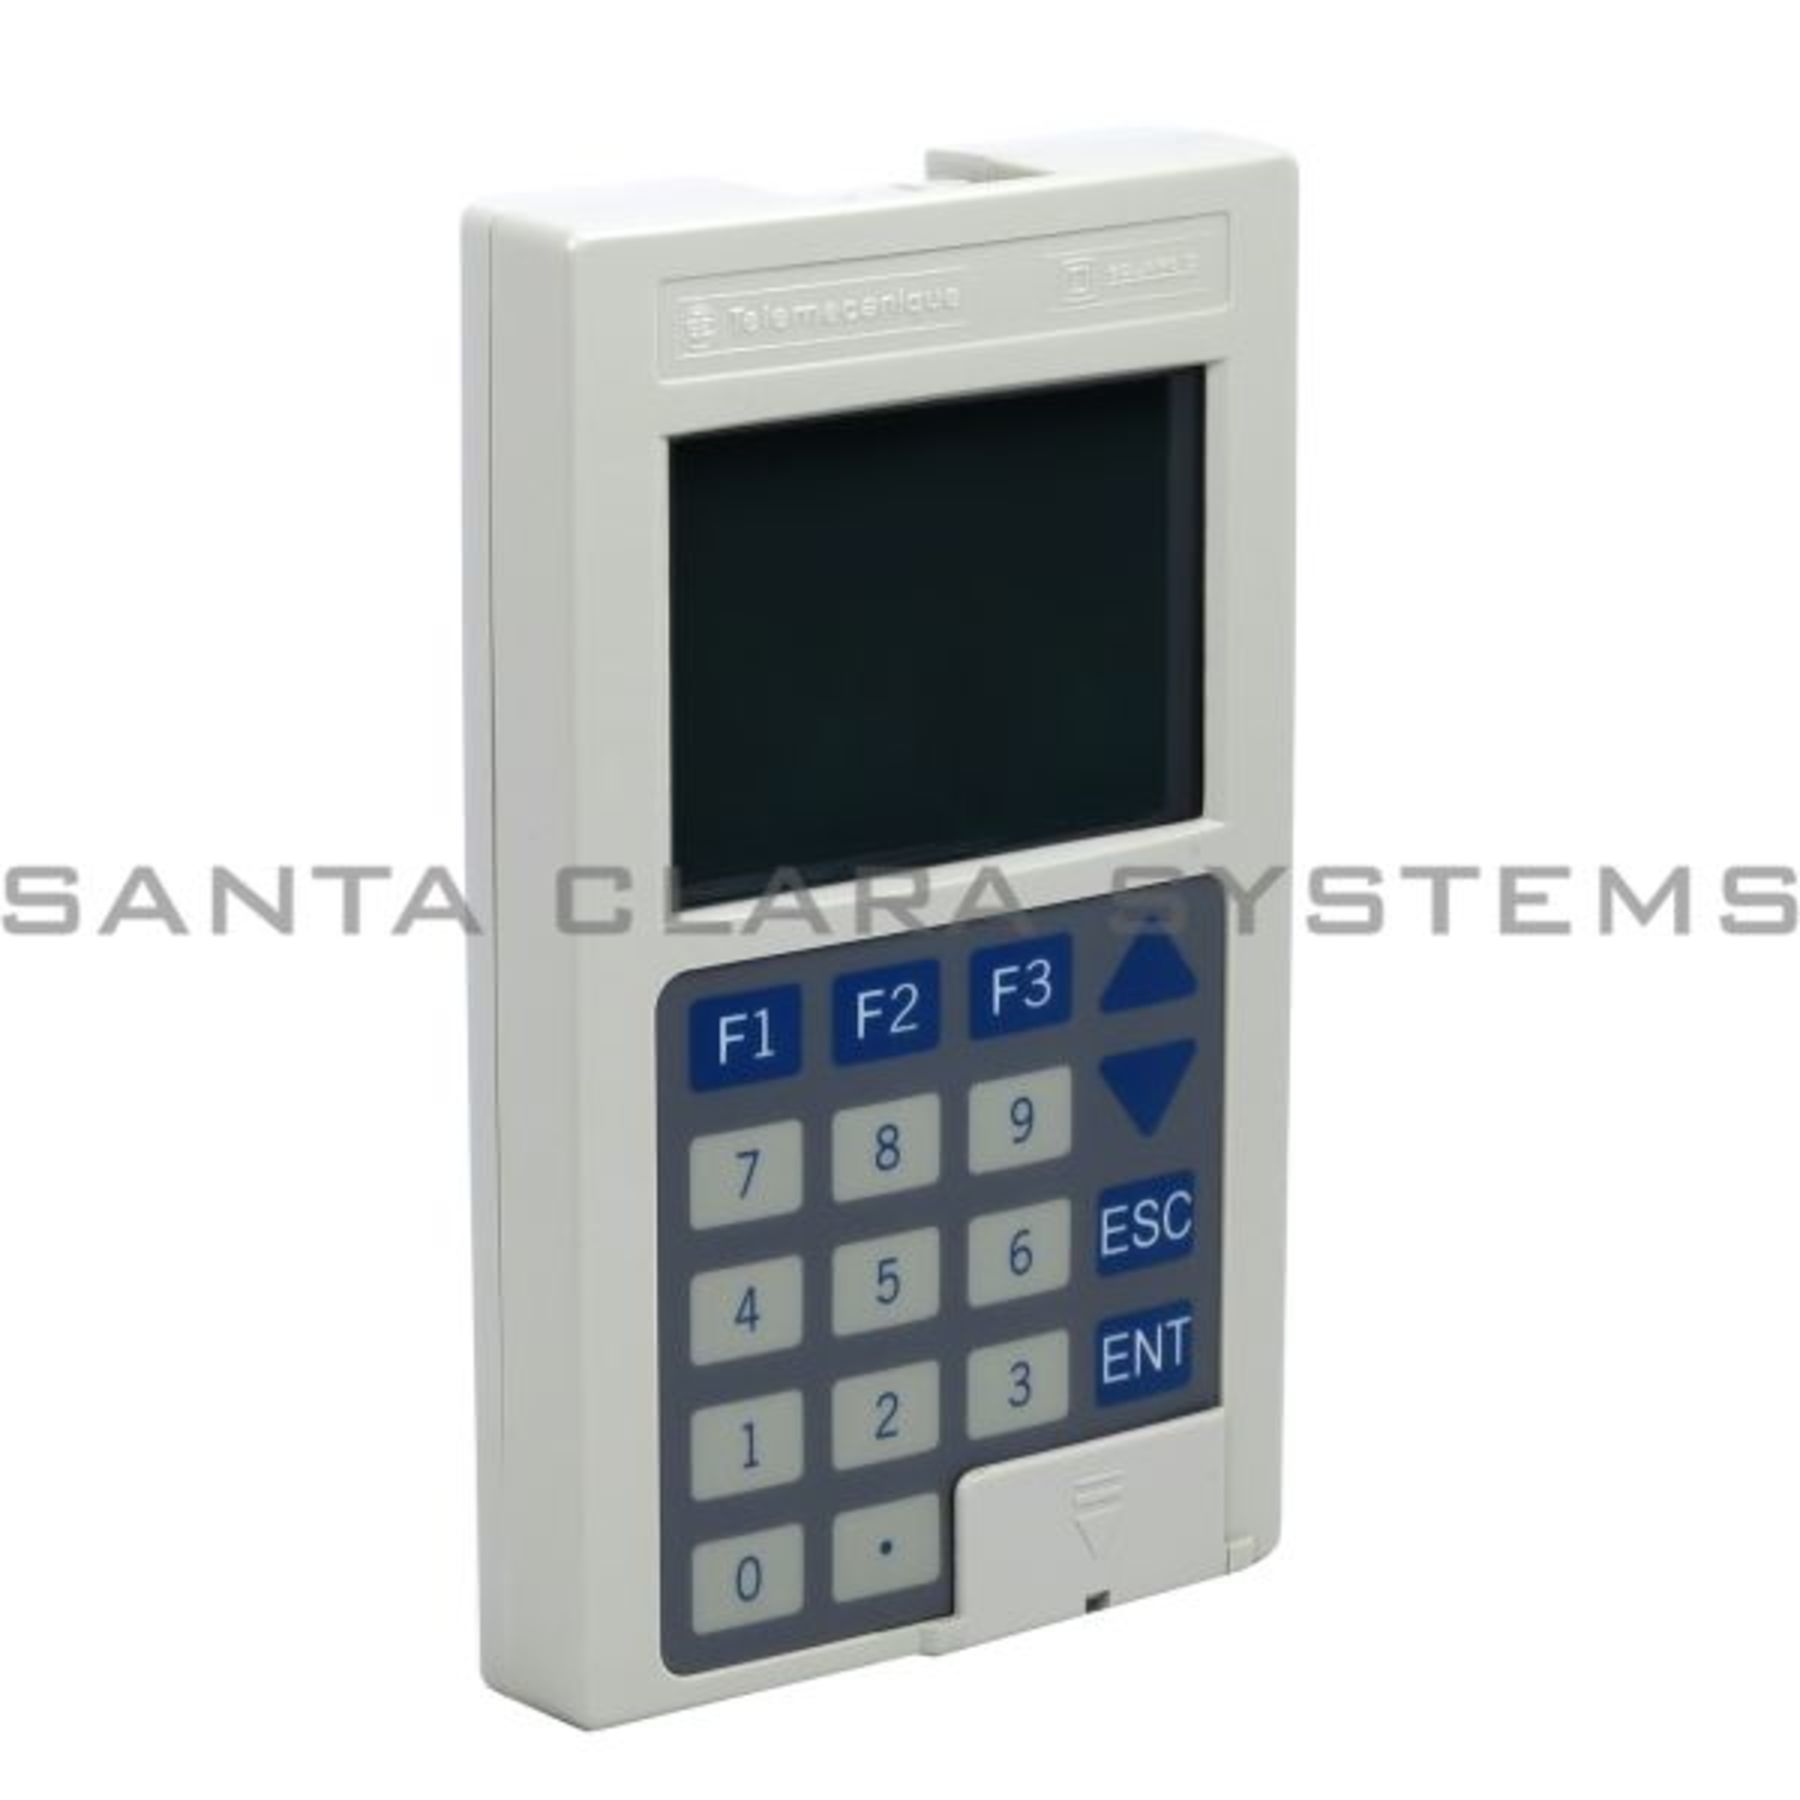 Telemecanique VW3A66206 Industrial Control System for sale online 